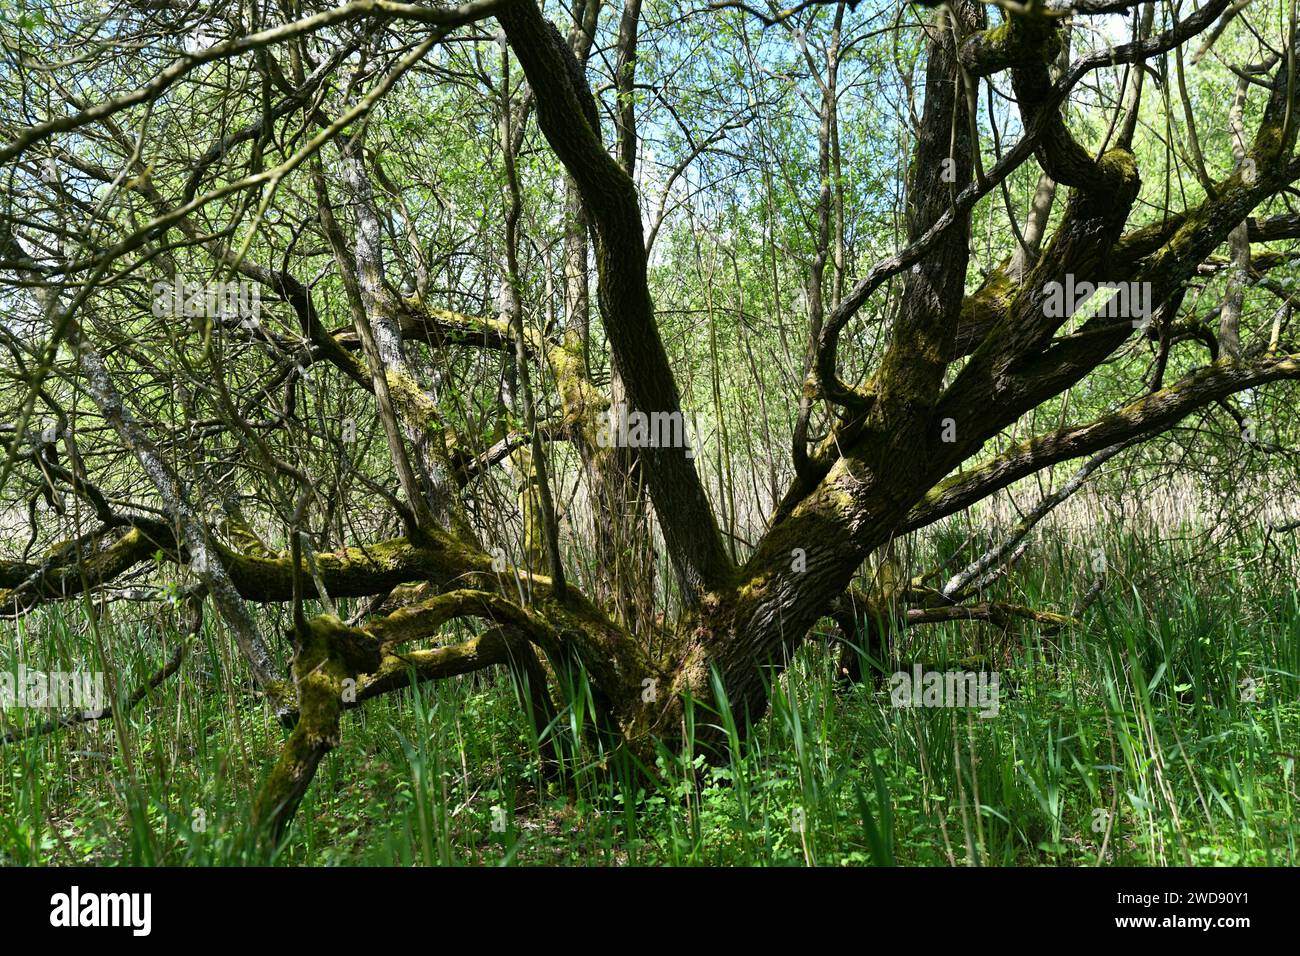 Salix alba or white willow in Leighton Moss Nature Reserve, England Stock Photo